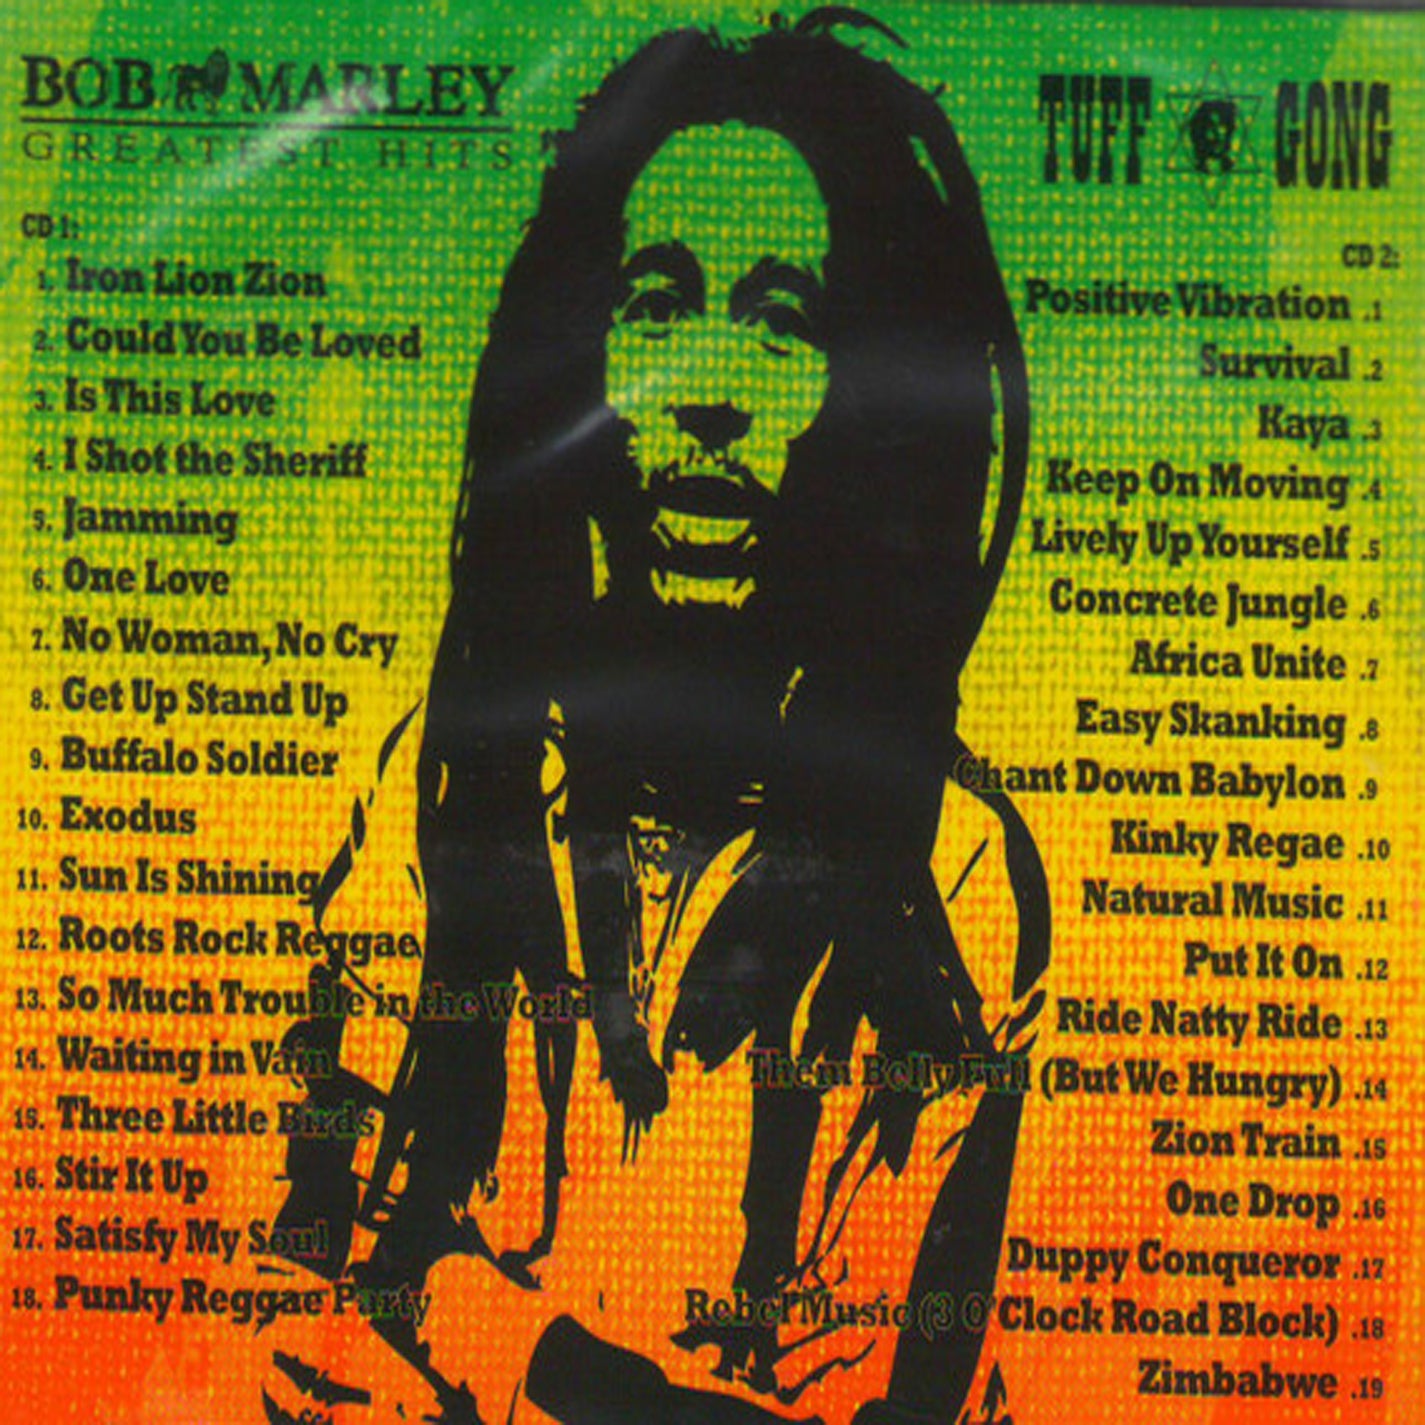 BOB MARLEY - GREATEST HITS (CD LP) c1994